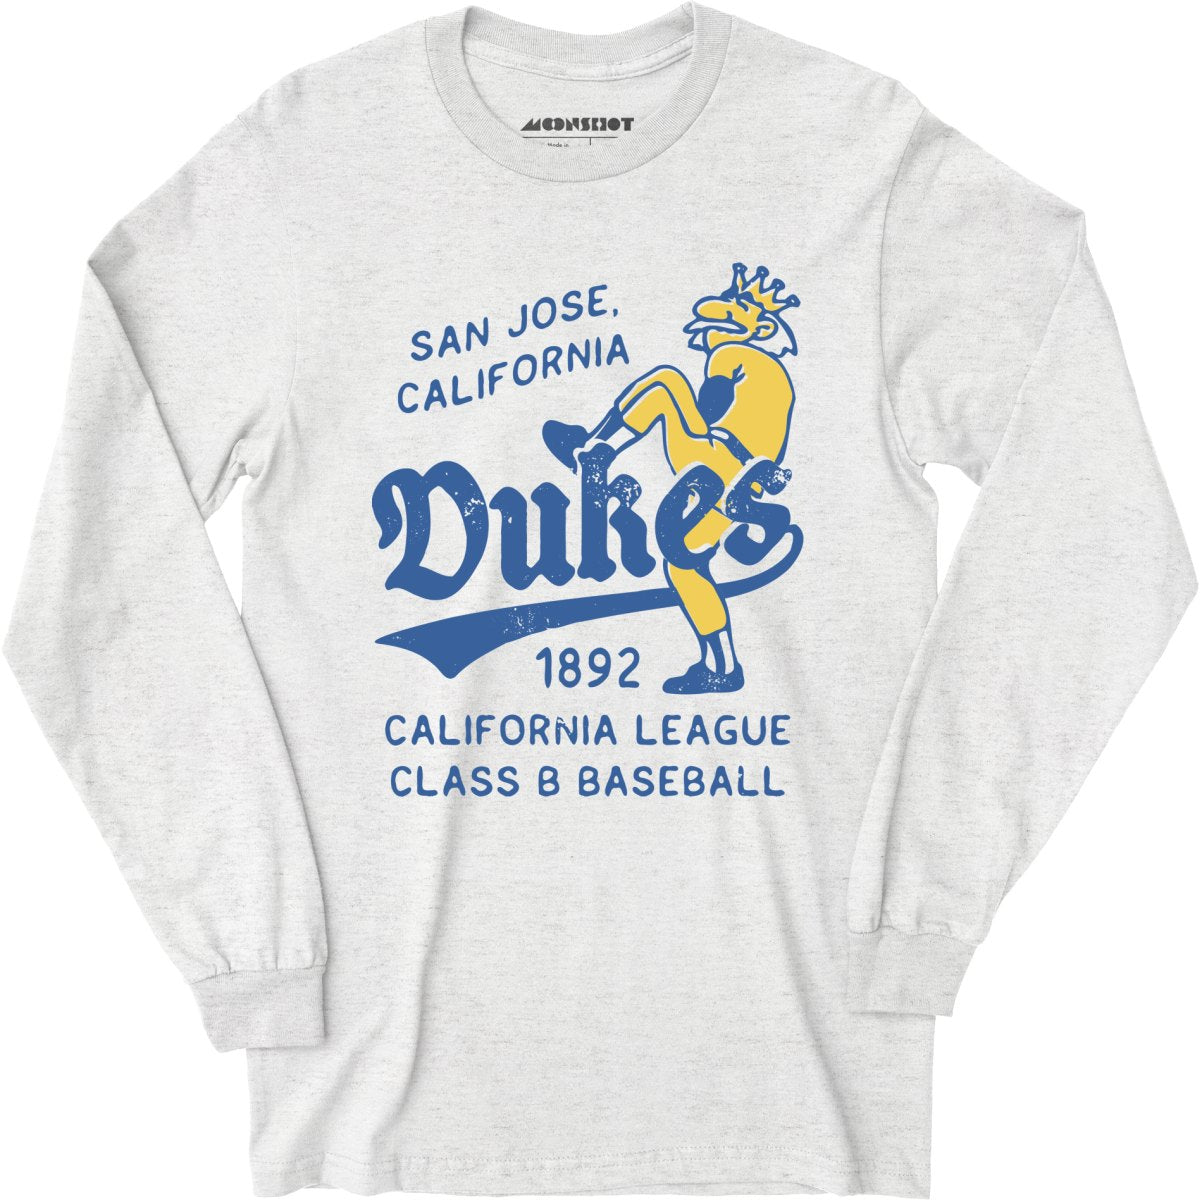 San Jose Dukes - California - Vintage Defunct Baseball Teams - Long Sleeve T-Shirt